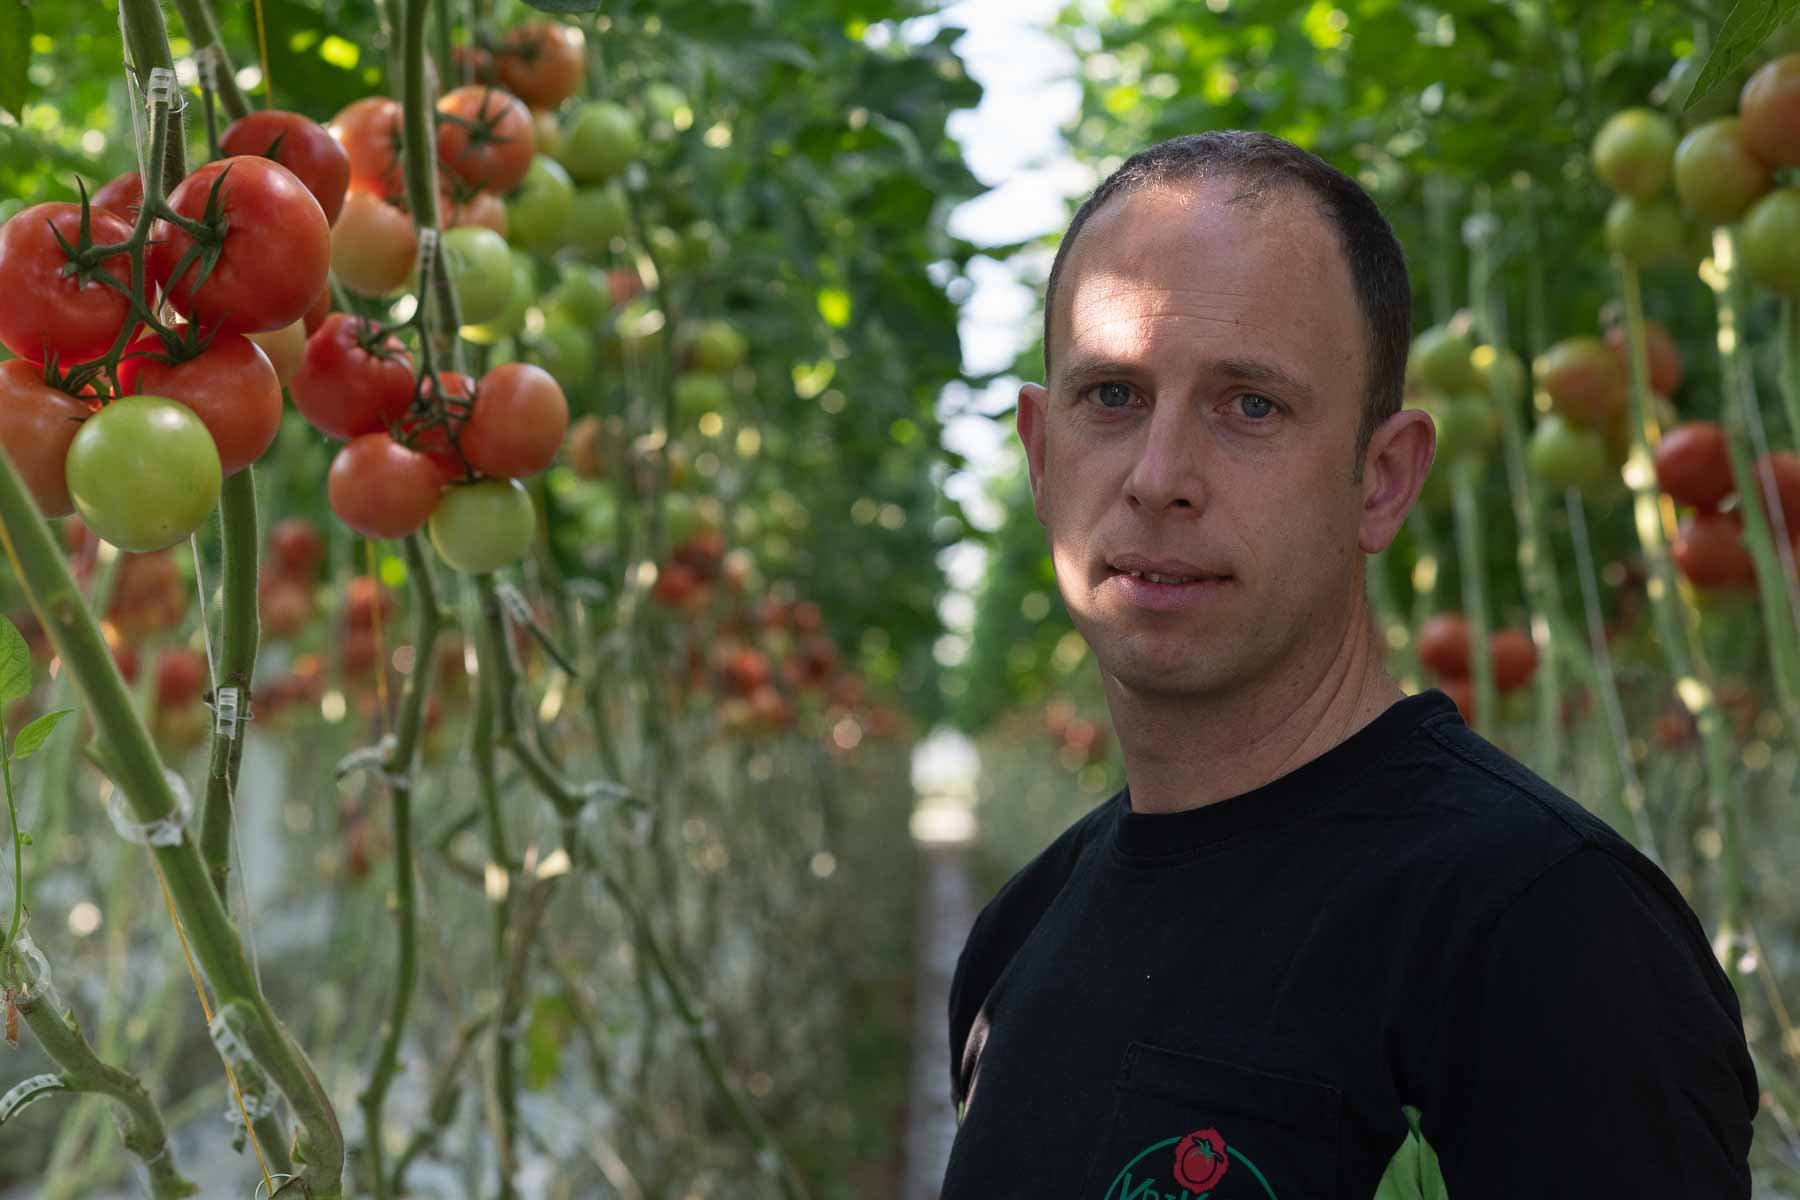  Kris De Weerdt, owner of Belgian tomato producer Krikato BV, in his greenhouses 